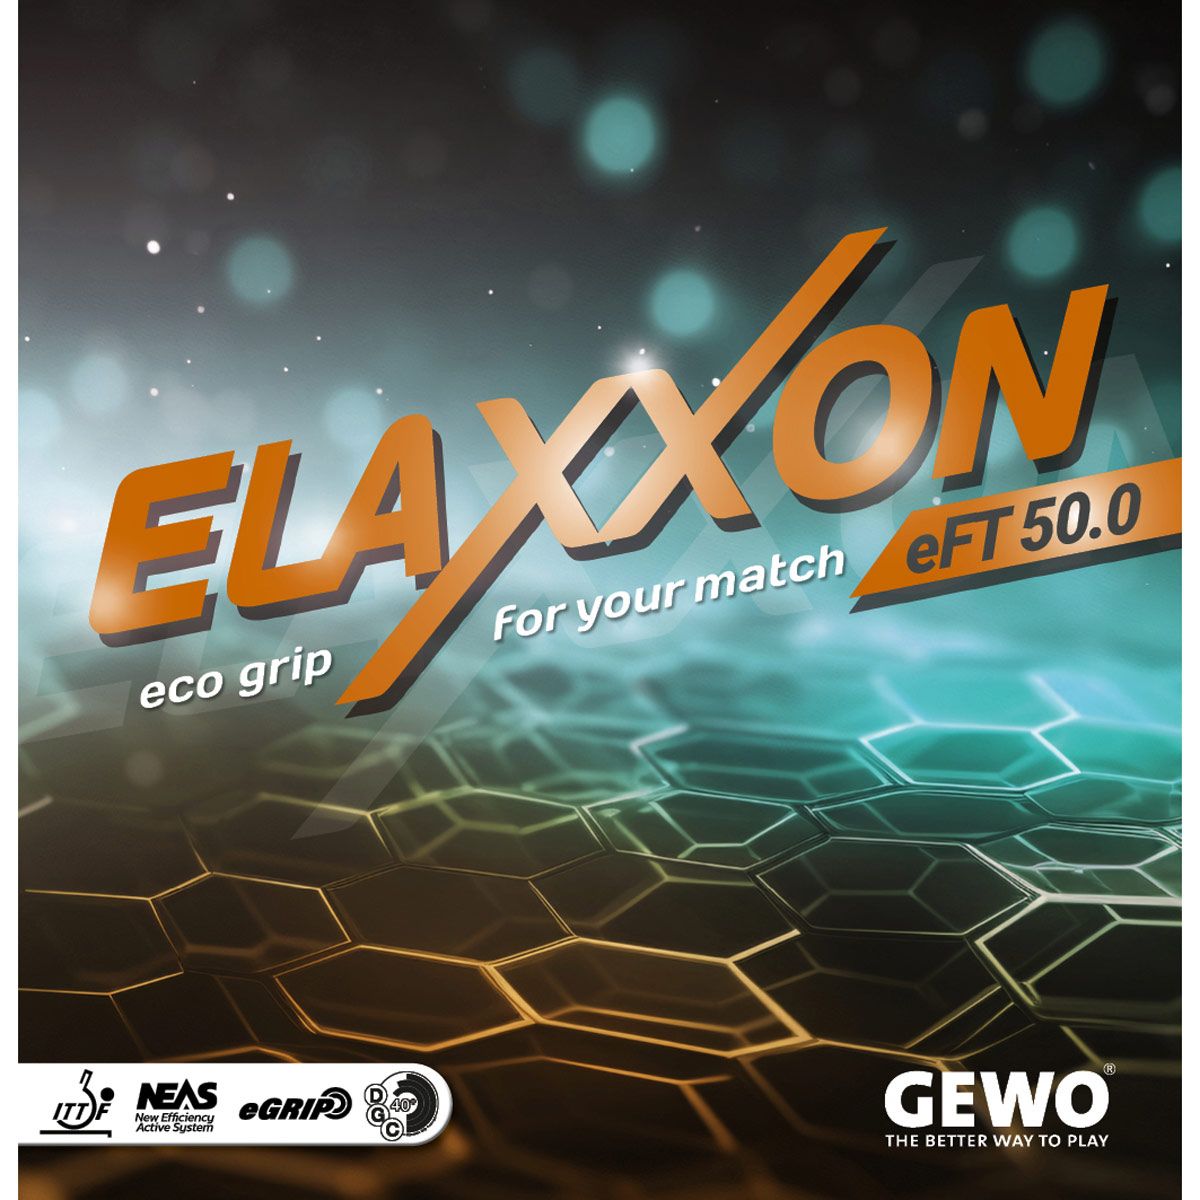 GEWO Elaxxon eFT 50.0 - Table Tennis Rubber